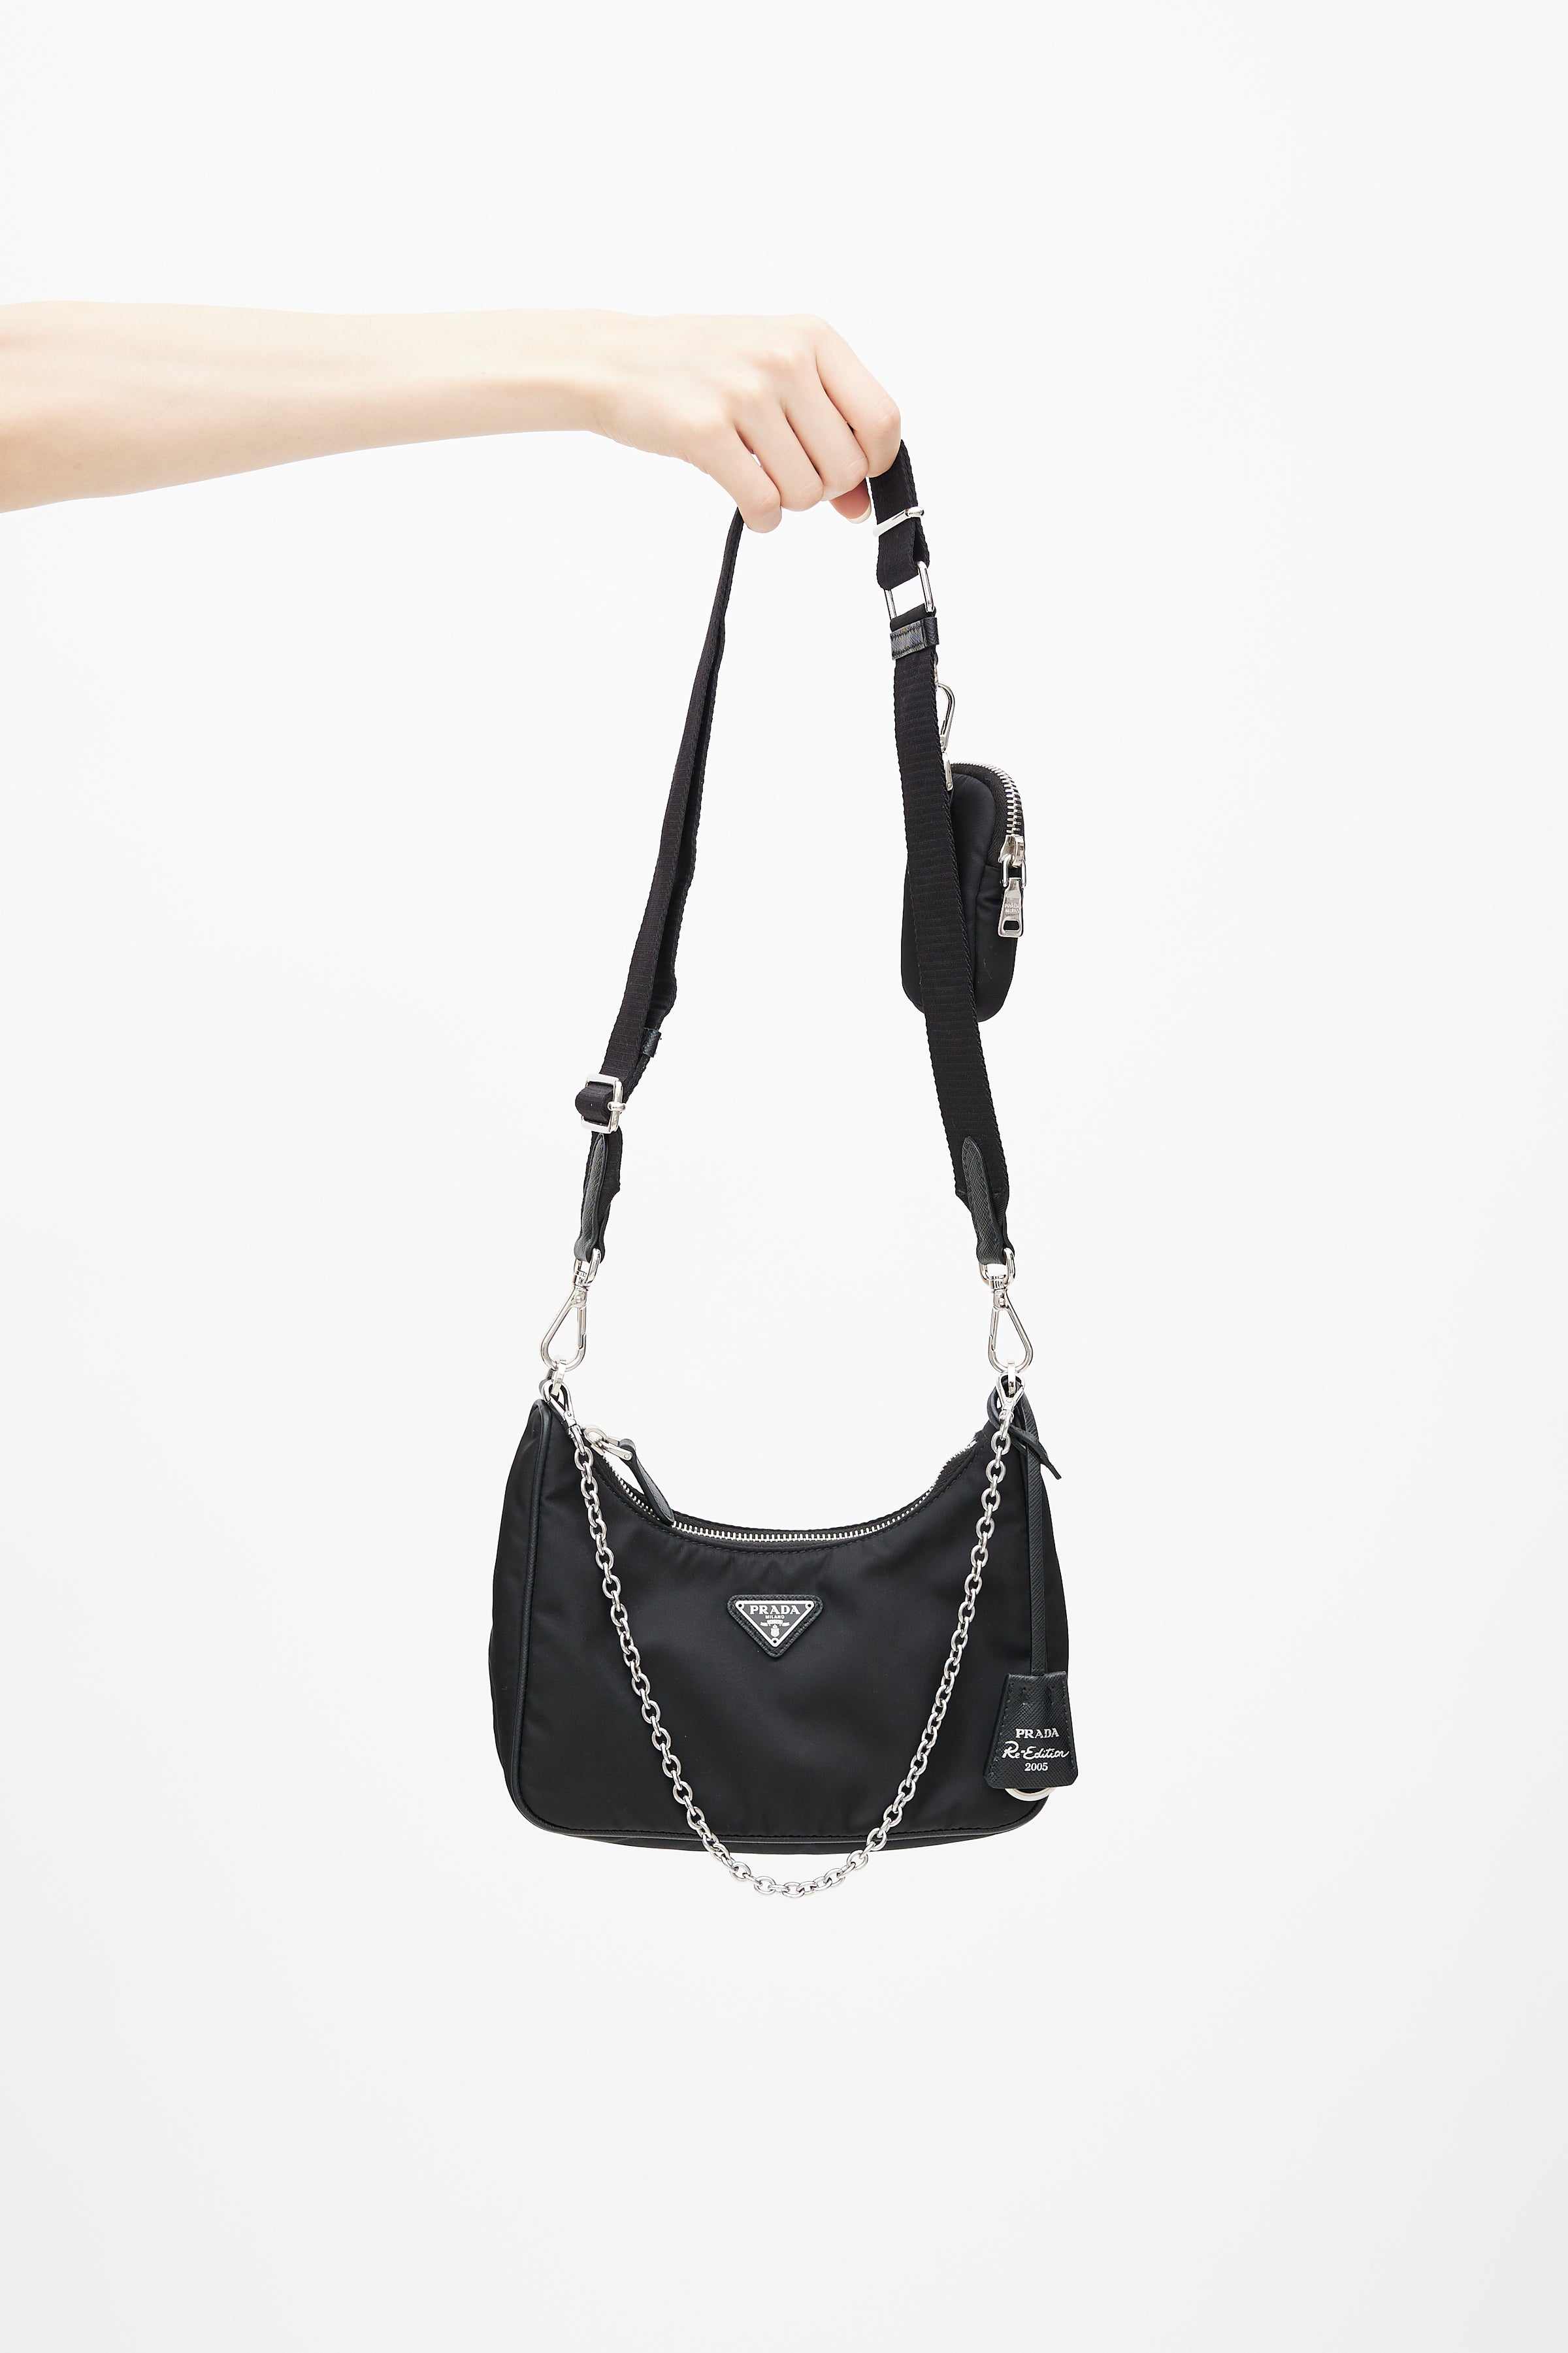 Prada Nylon Chain Link Shoulder Bag Black in Nylon with Silver-tone - US